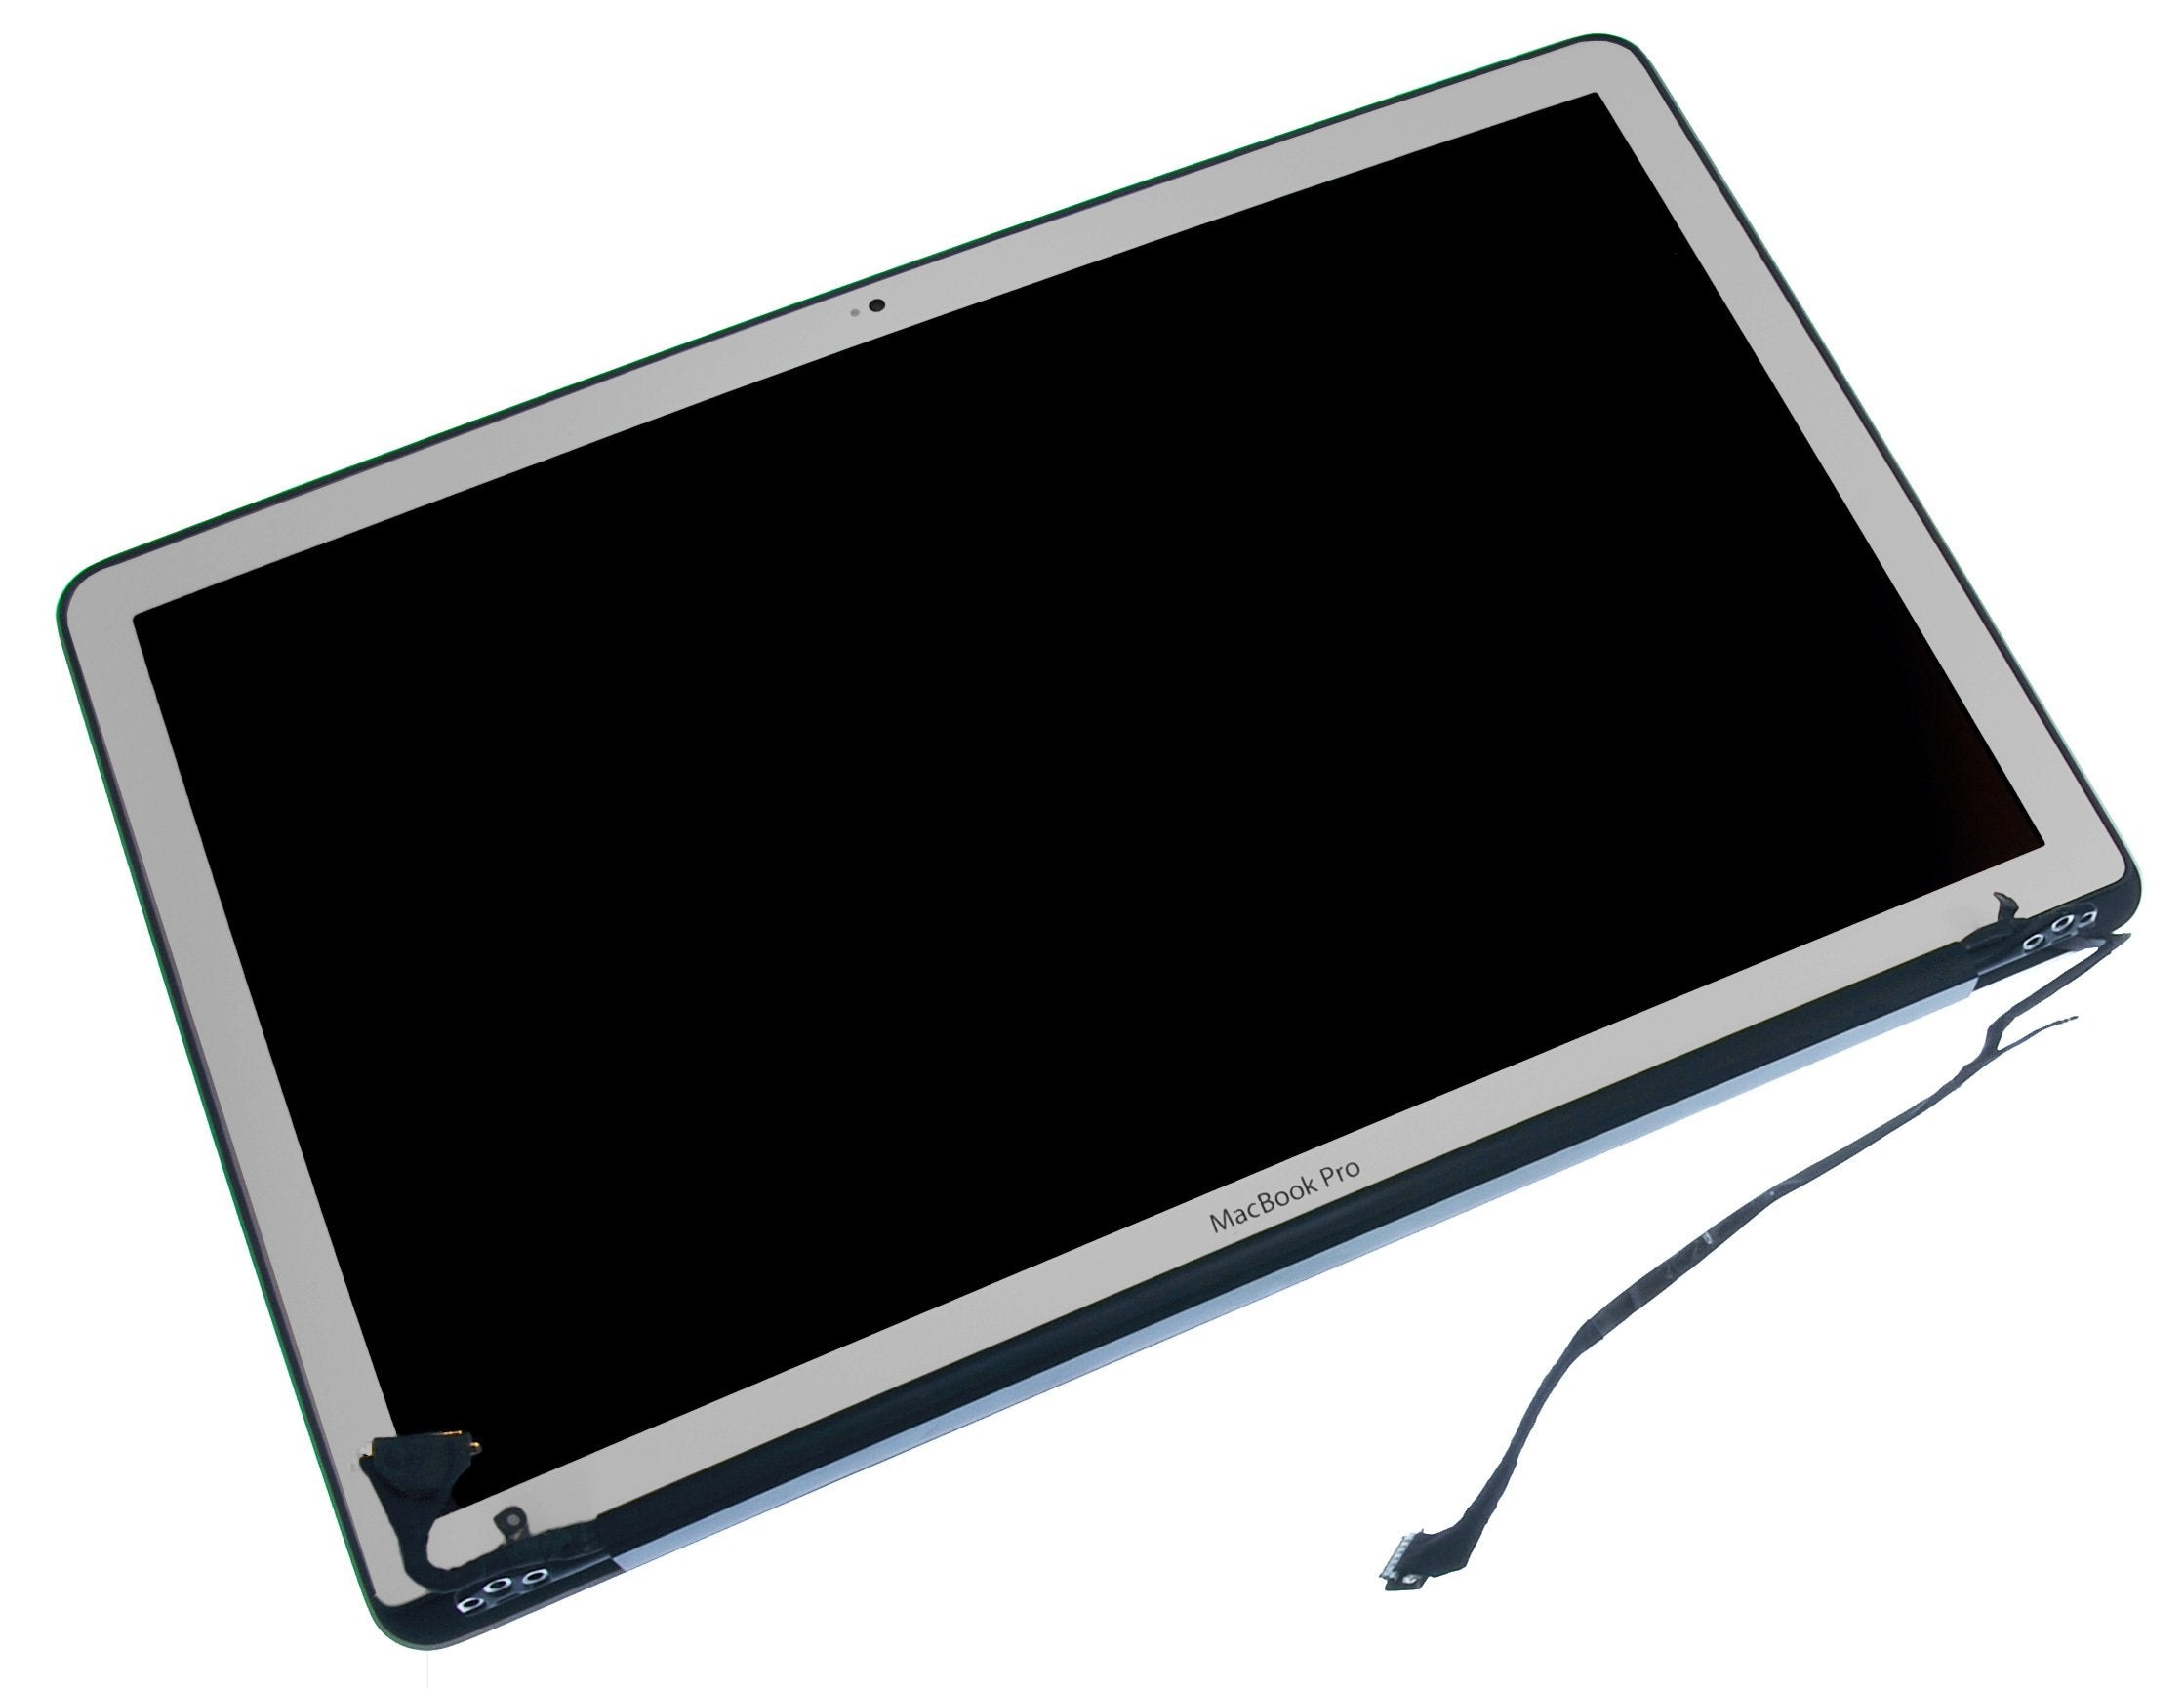 MacBook Pro 15" Unibody (Mid 2009) Anti-Glare Display Assembly